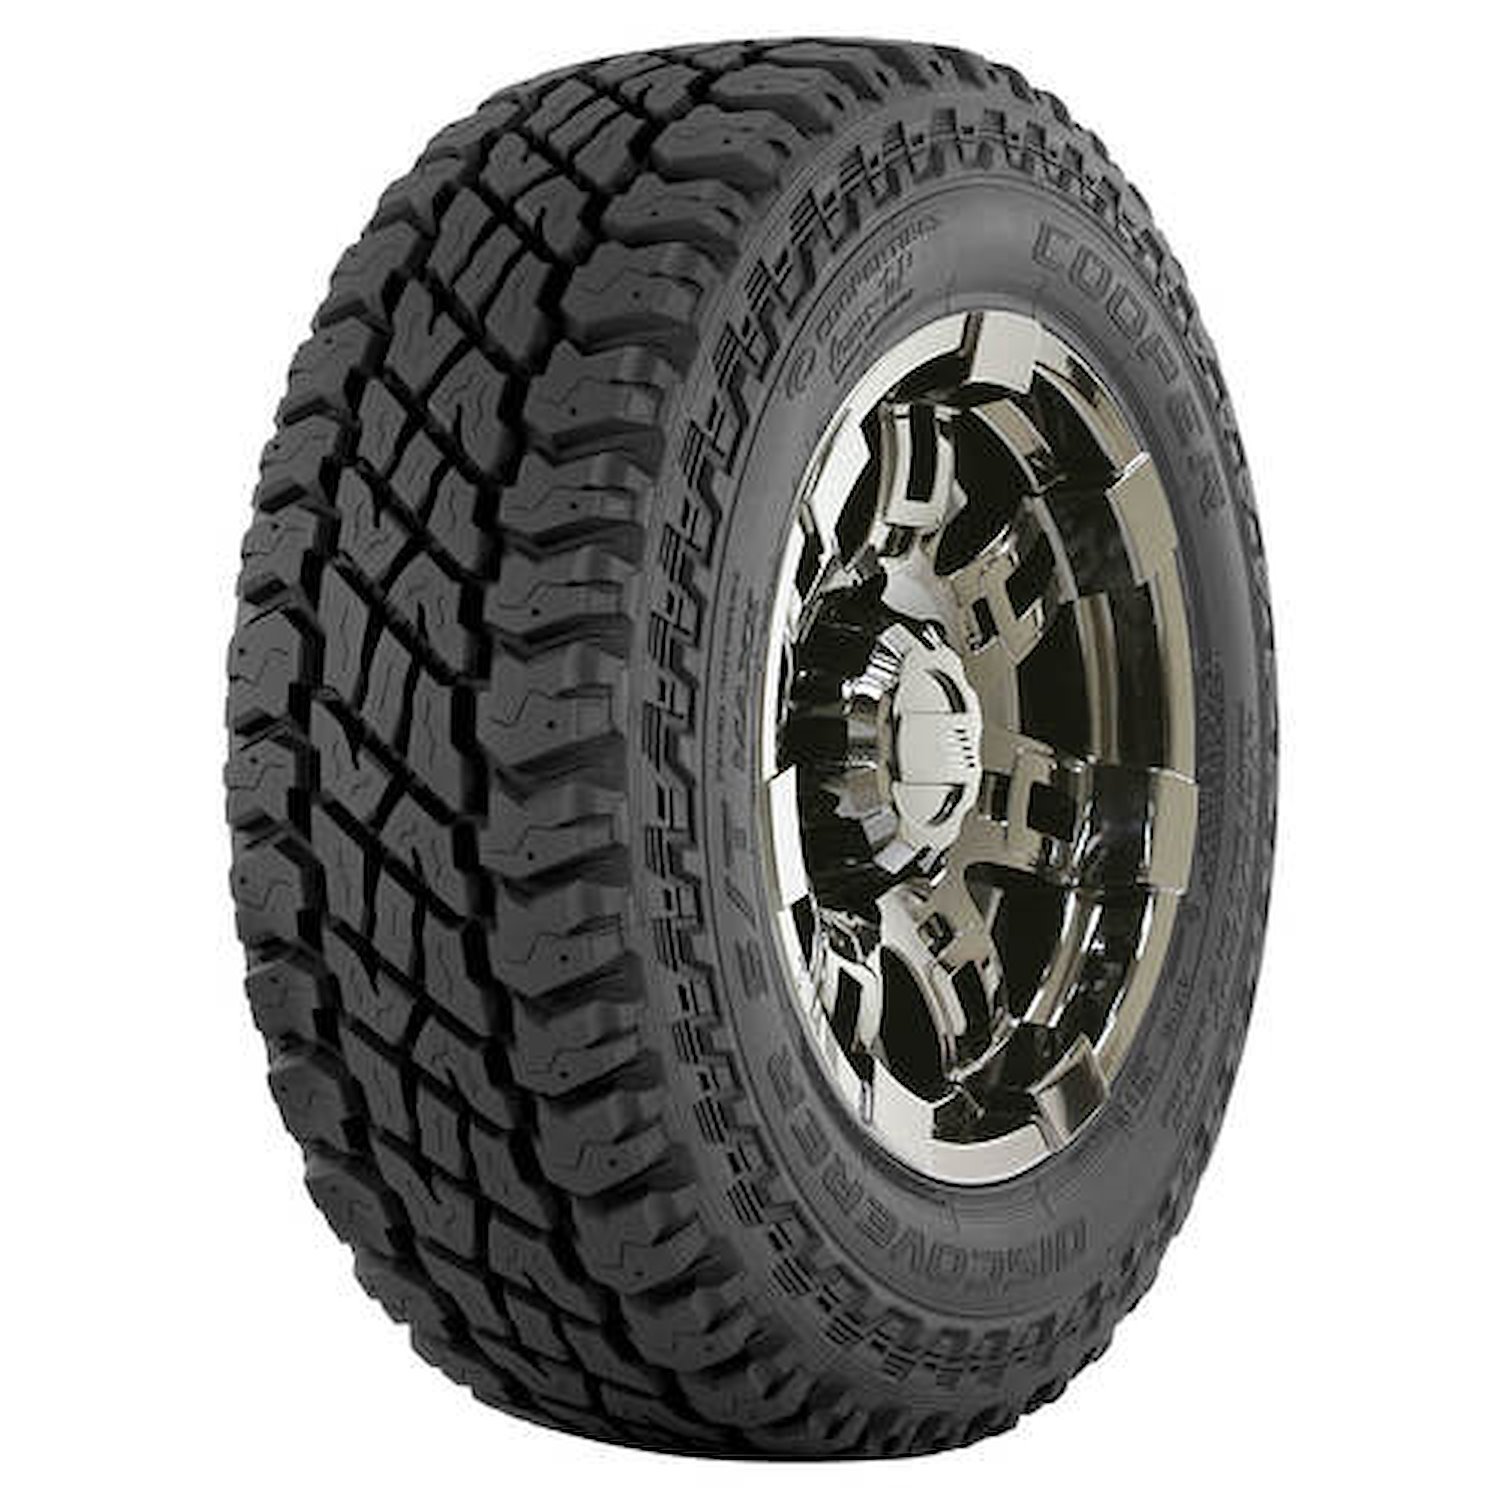 Discoverer S/T Maxx All-Terrain Tire, LT265/70R17